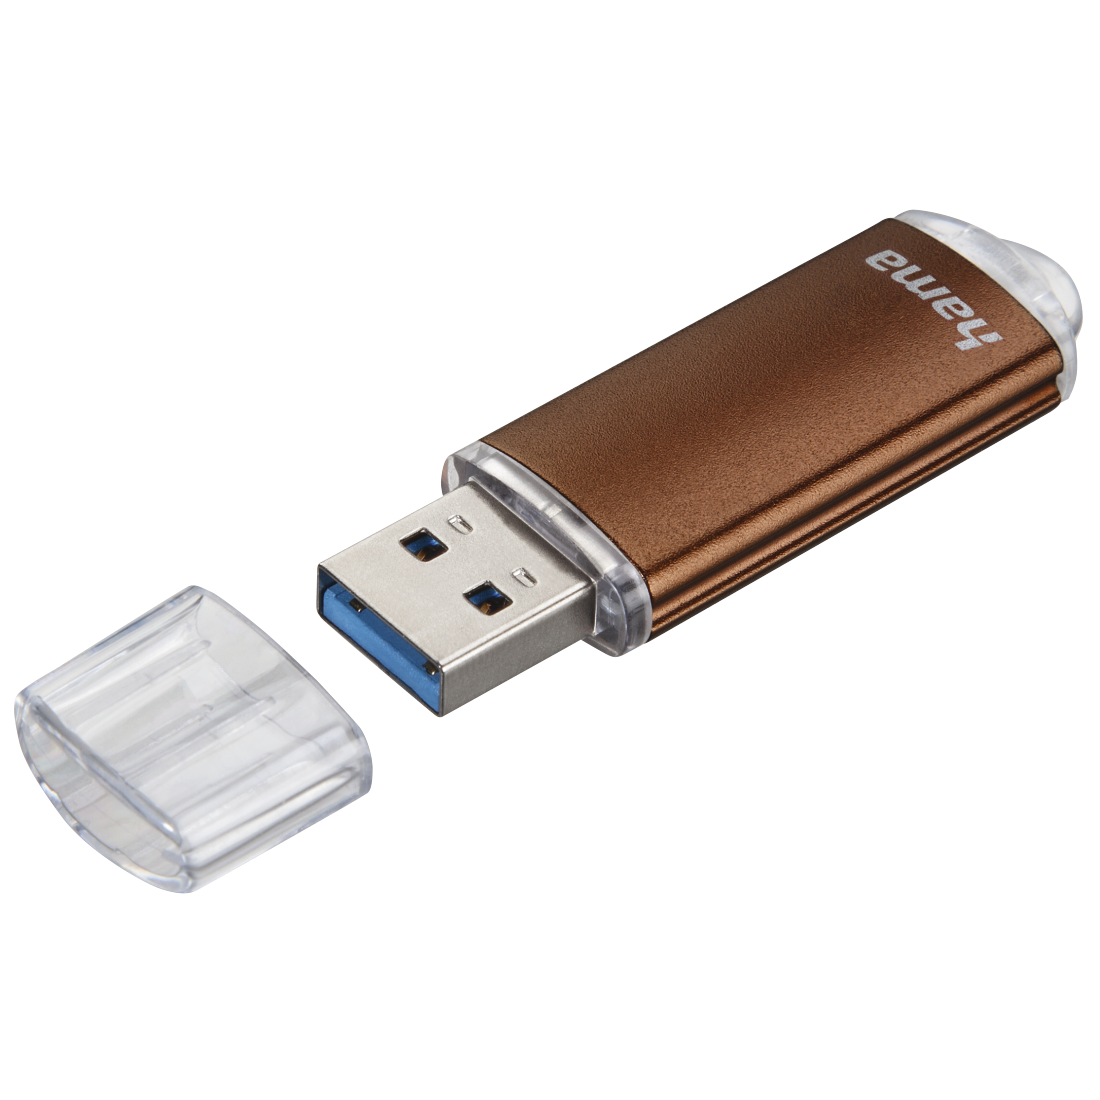 00124157 Hama "Laeta" USB Stick, USB 3.0, 256 GB, 90 MB/s, bronze | hama.com